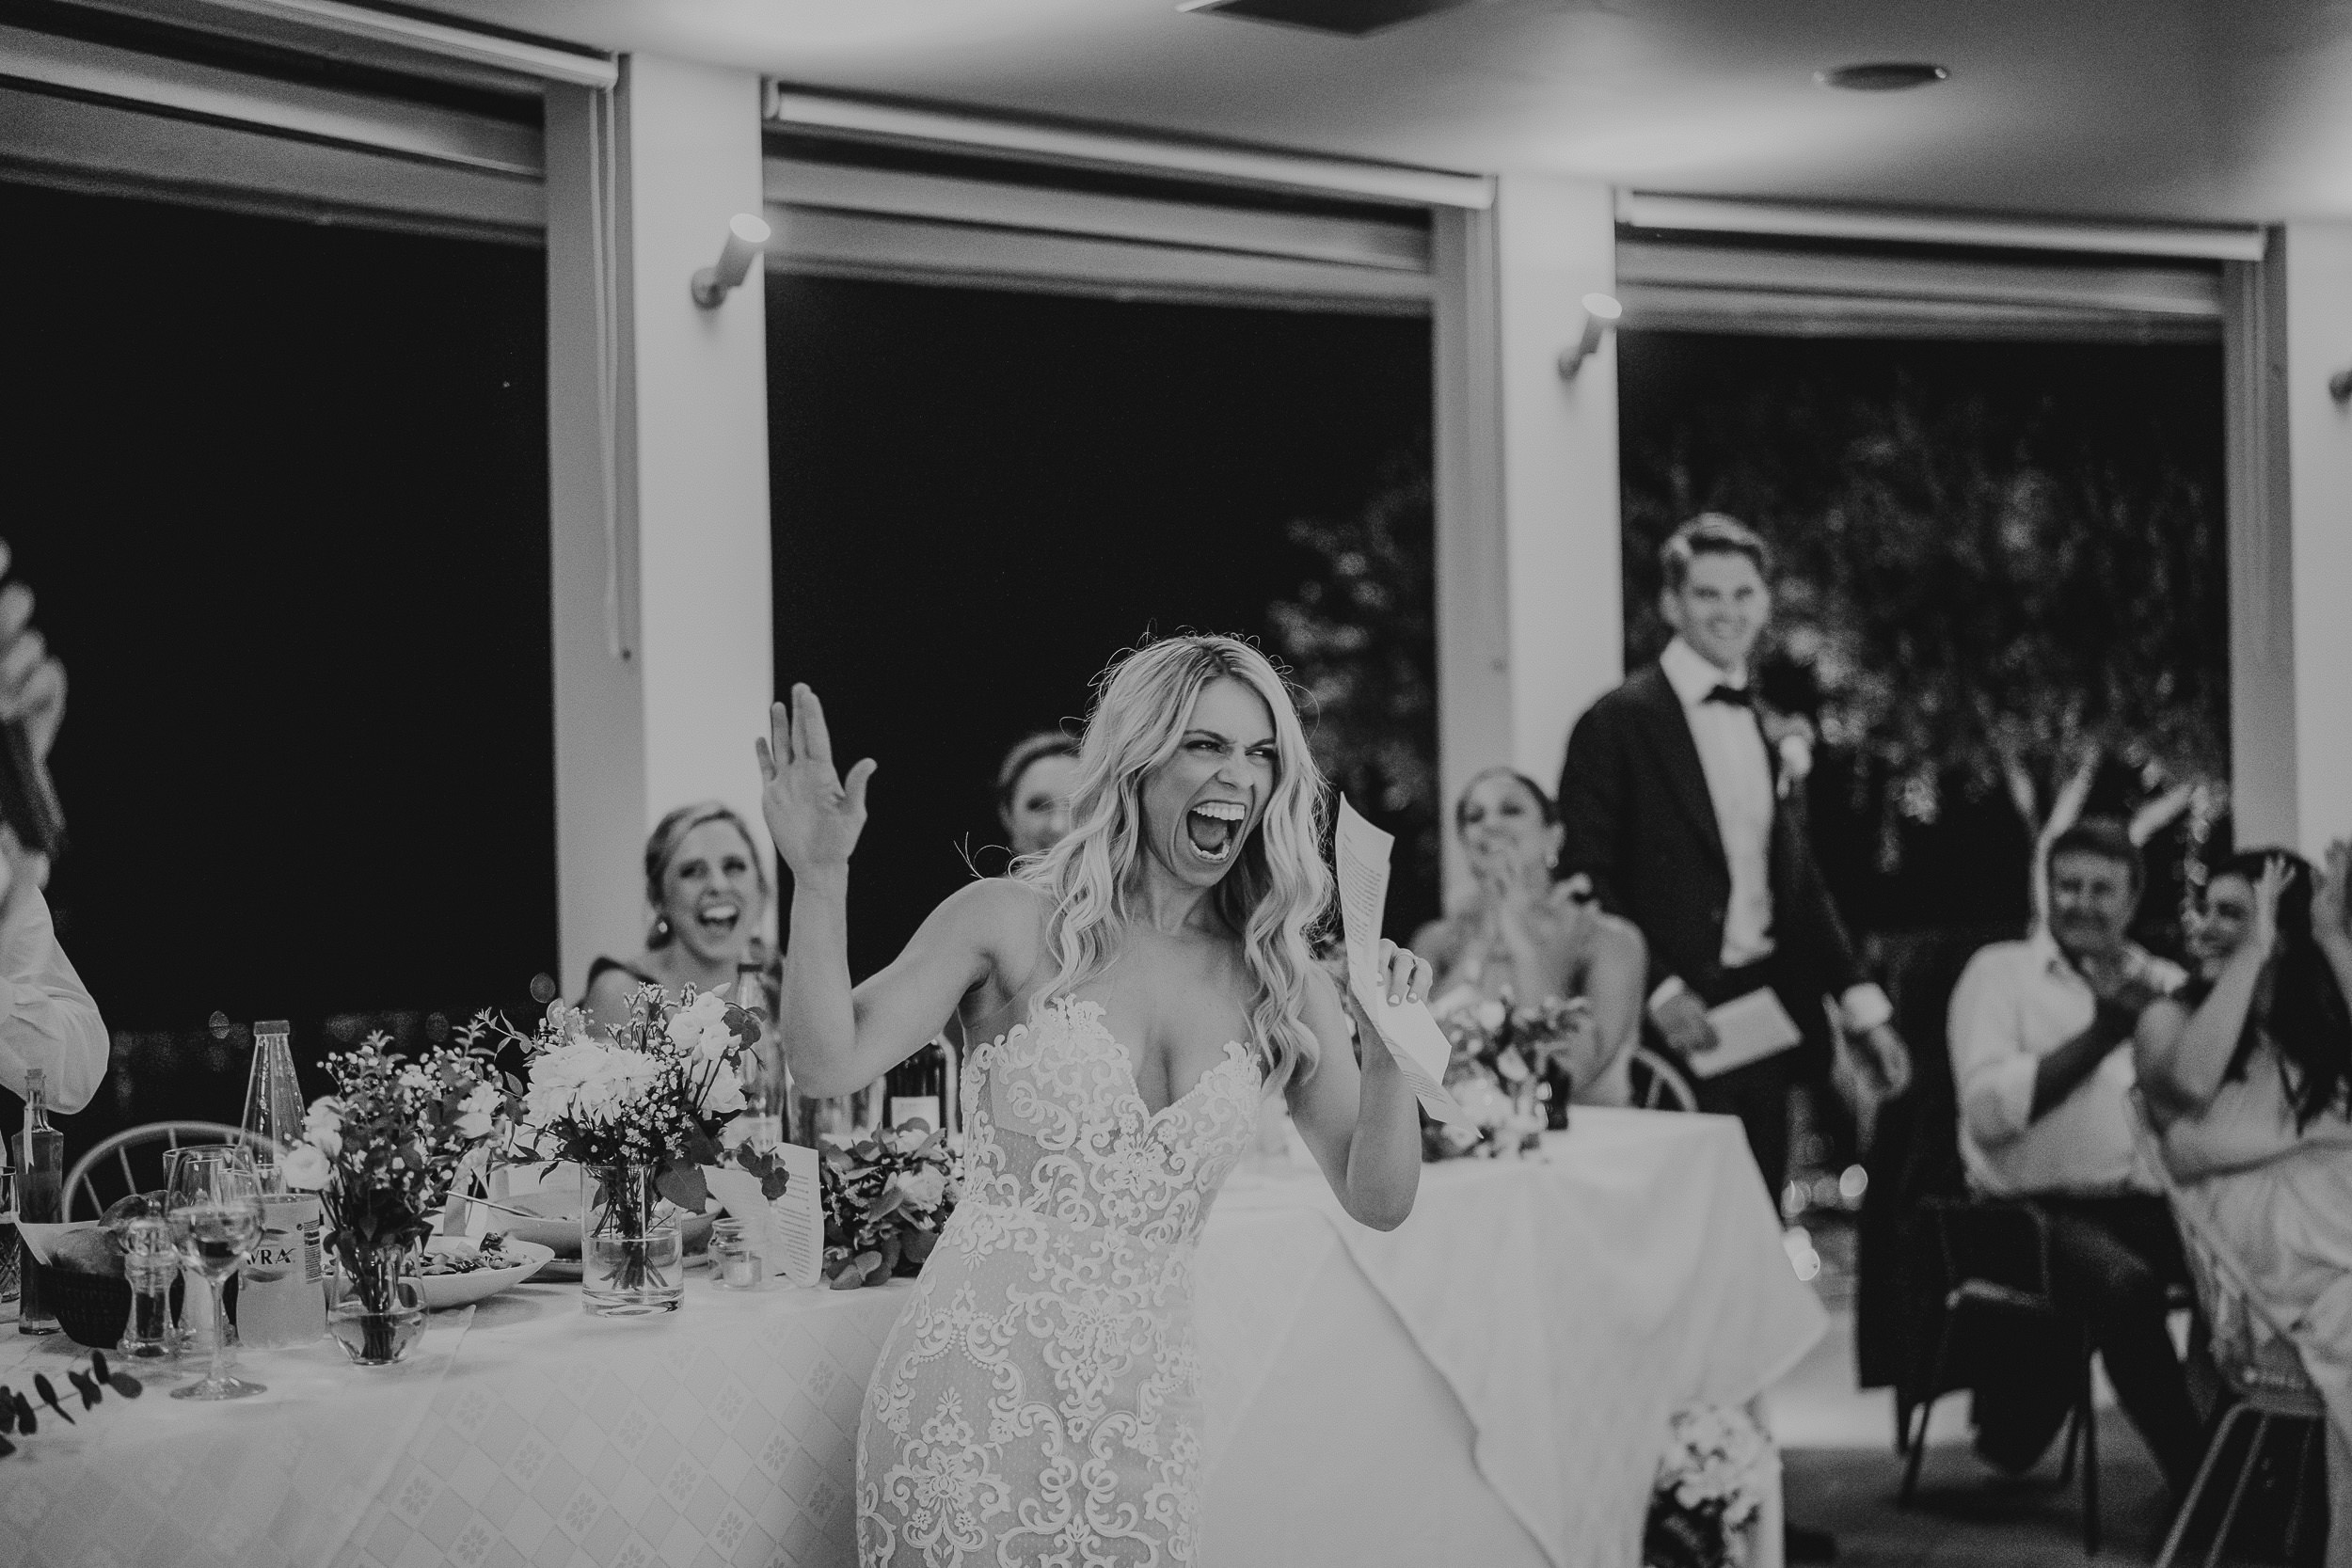 A joyful bride applauding at her wedding reception.